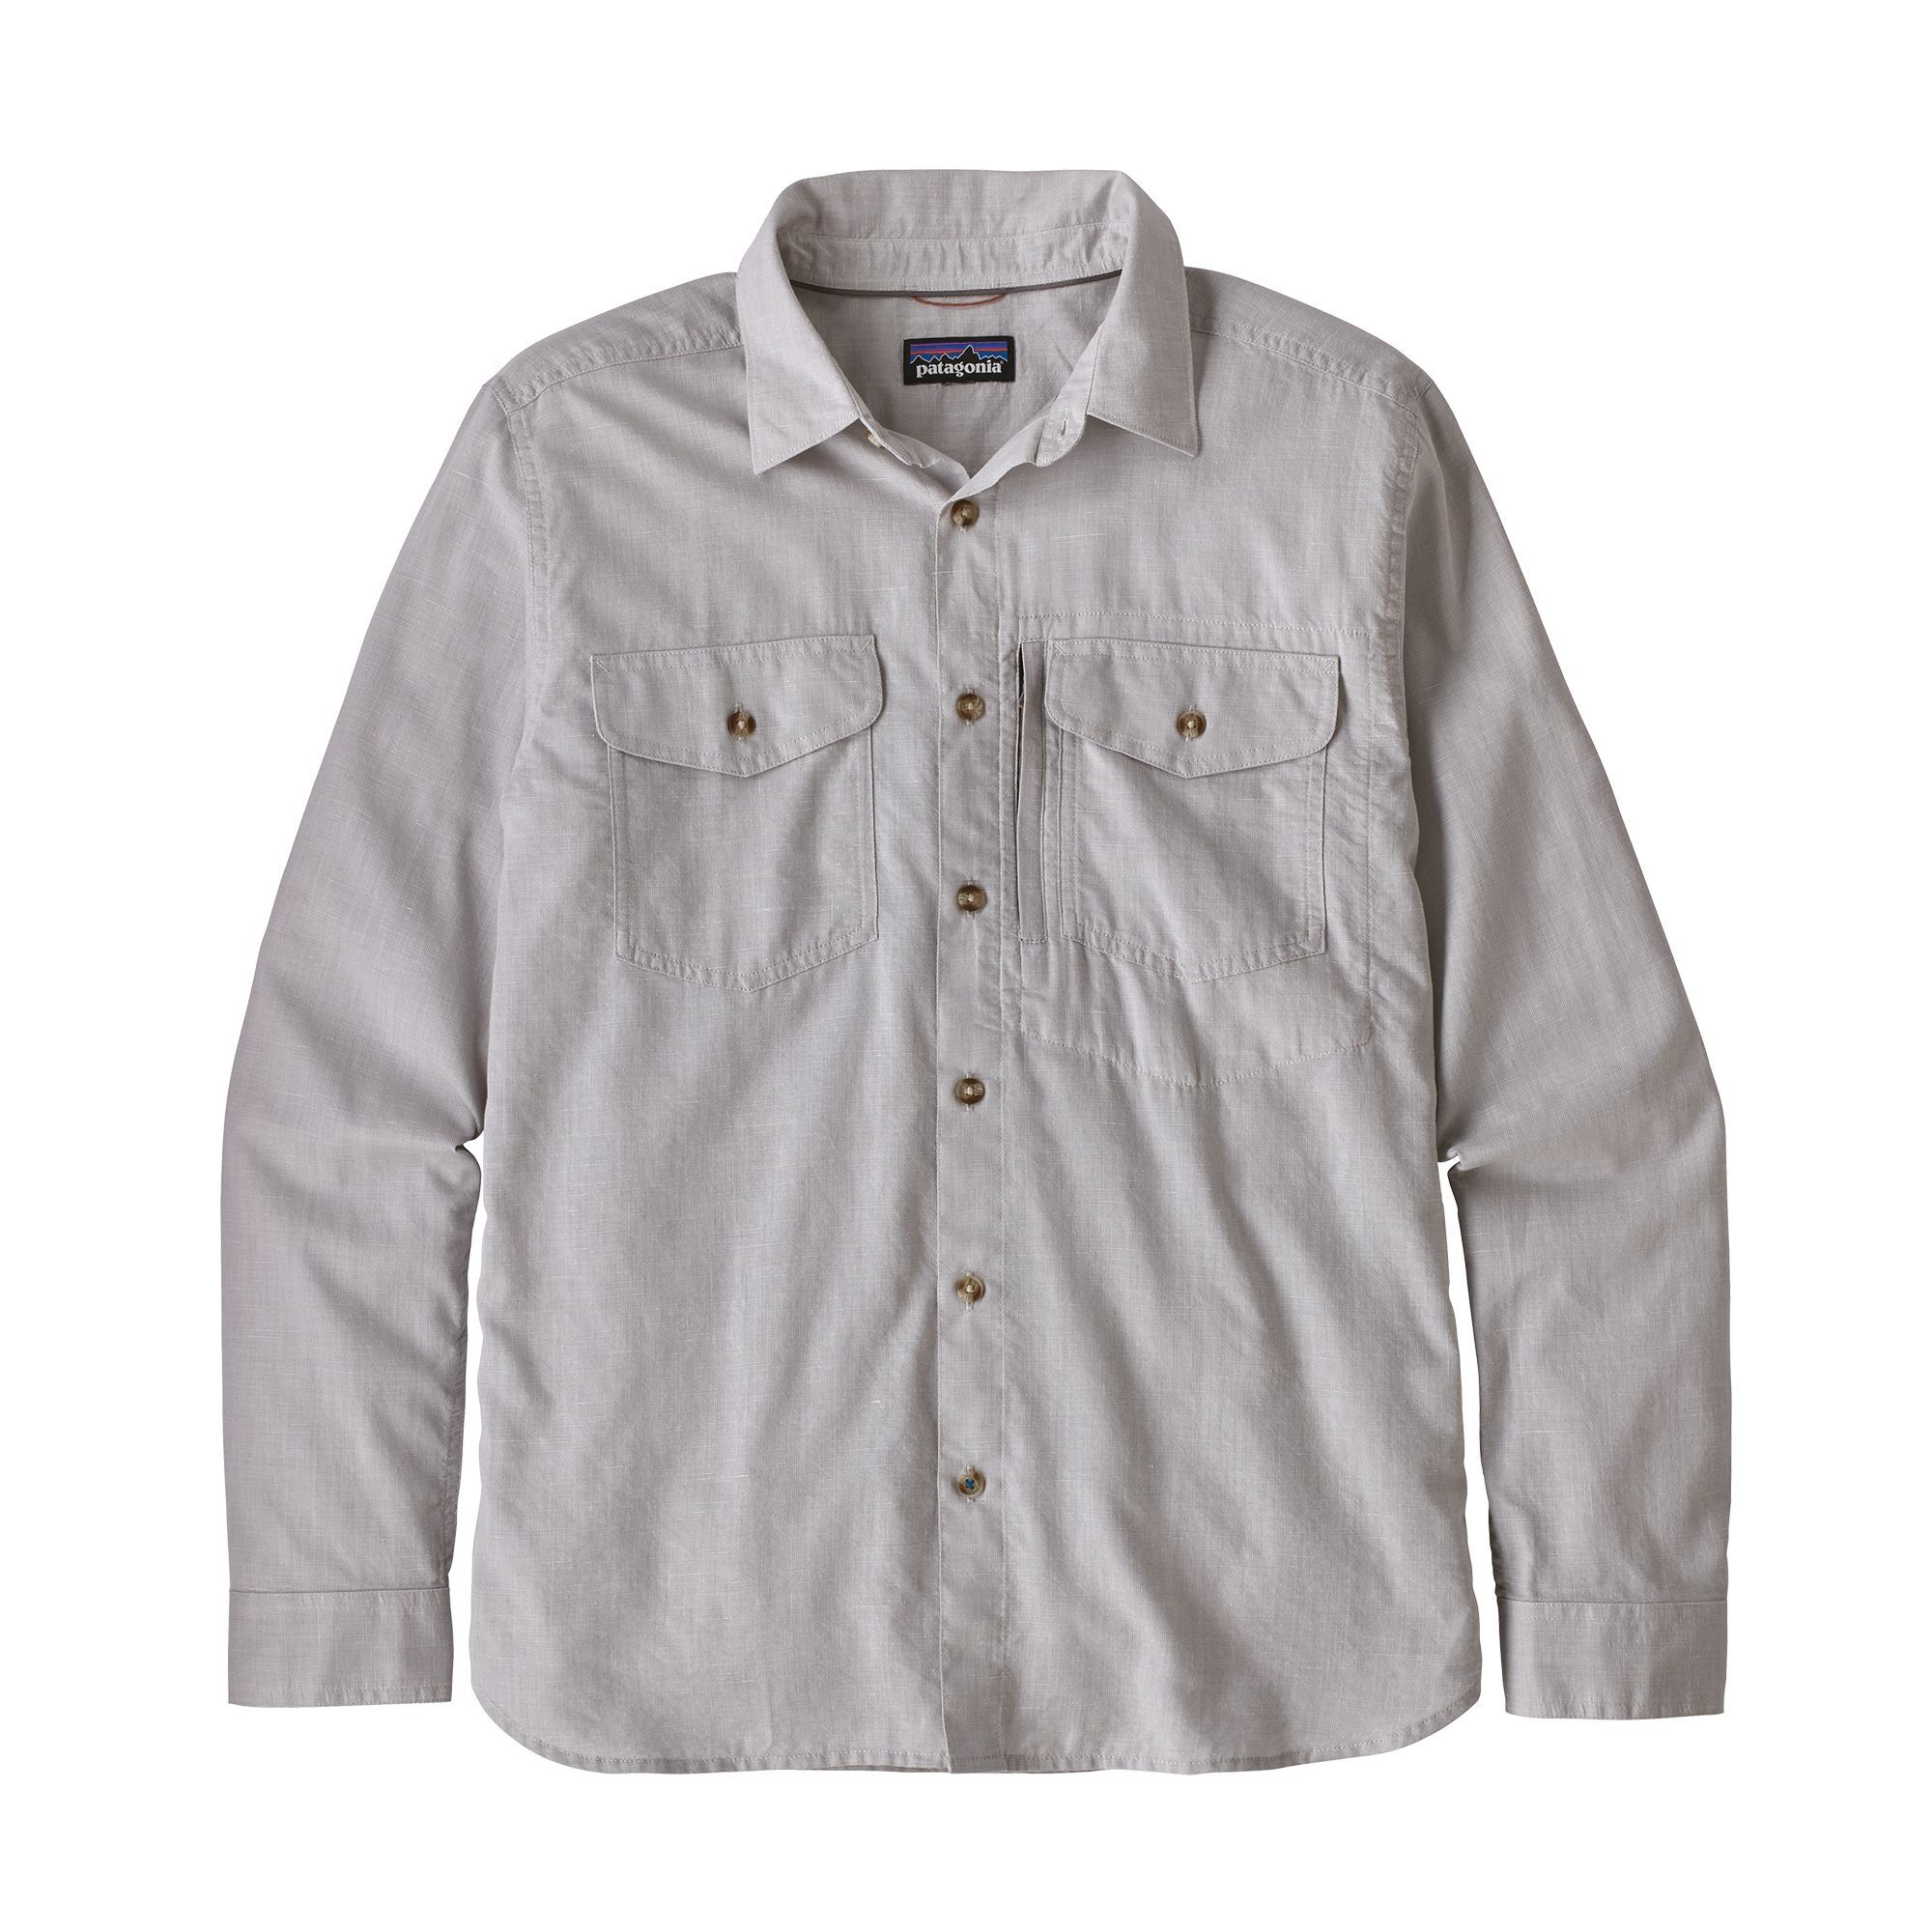 Patagonia Cayo Largo II Shirt, skjorte herre Chambray: Feather Grey 52126-CHFG M 2019